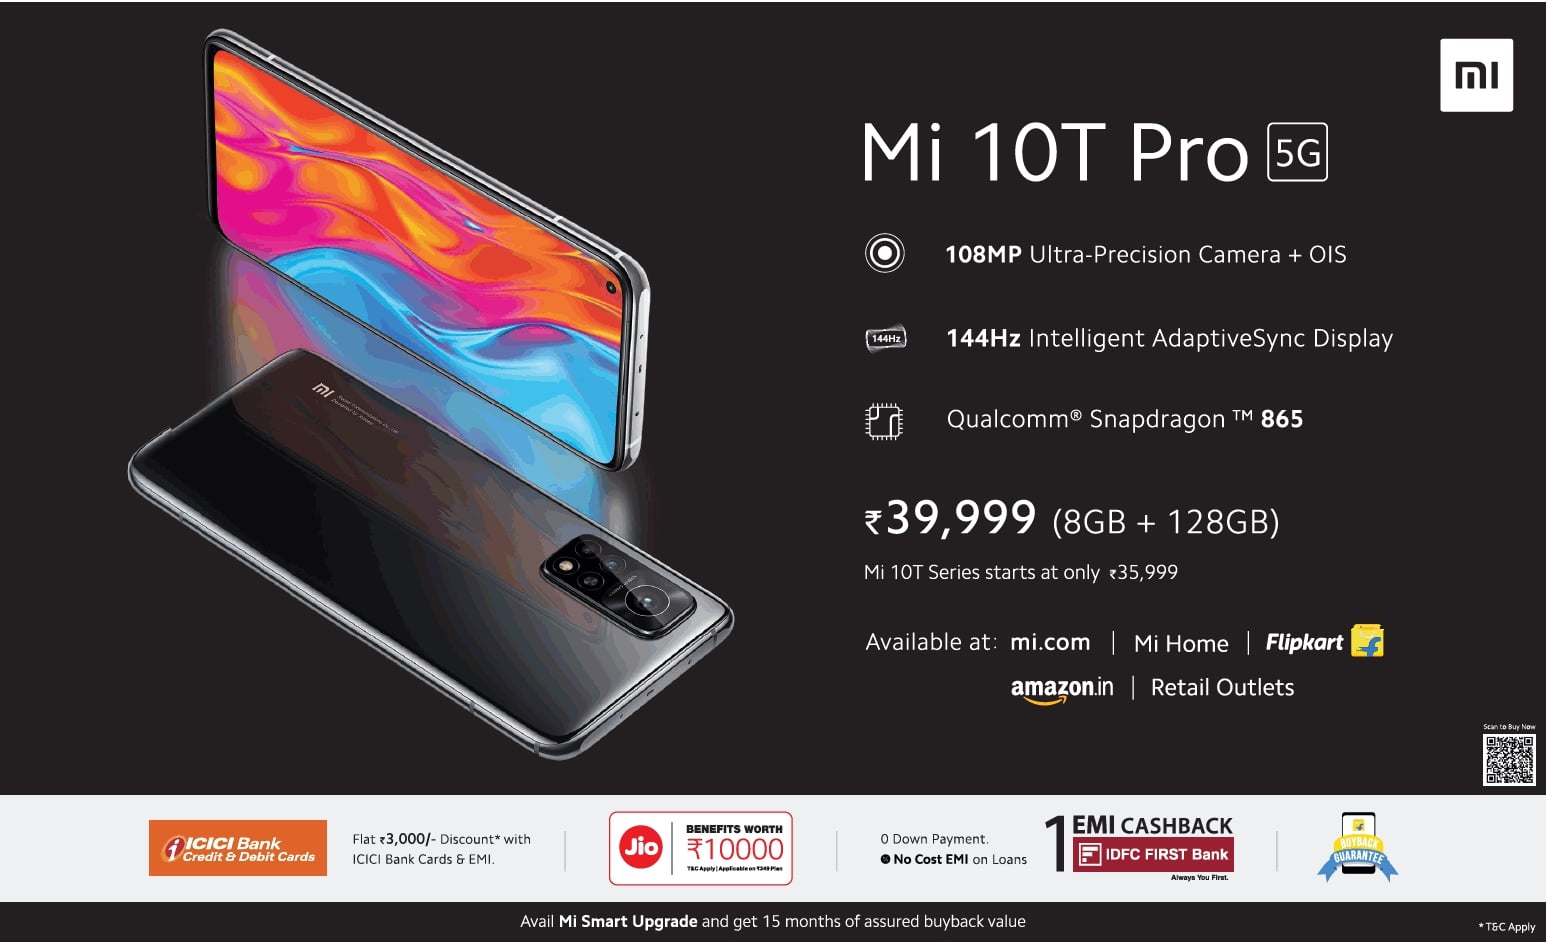 mi-10t-pro-5g-108mp-ultra-precision-camera-rupees-39999-8gb-128gb-ad-times-of-india-mumbai-01-01-2021